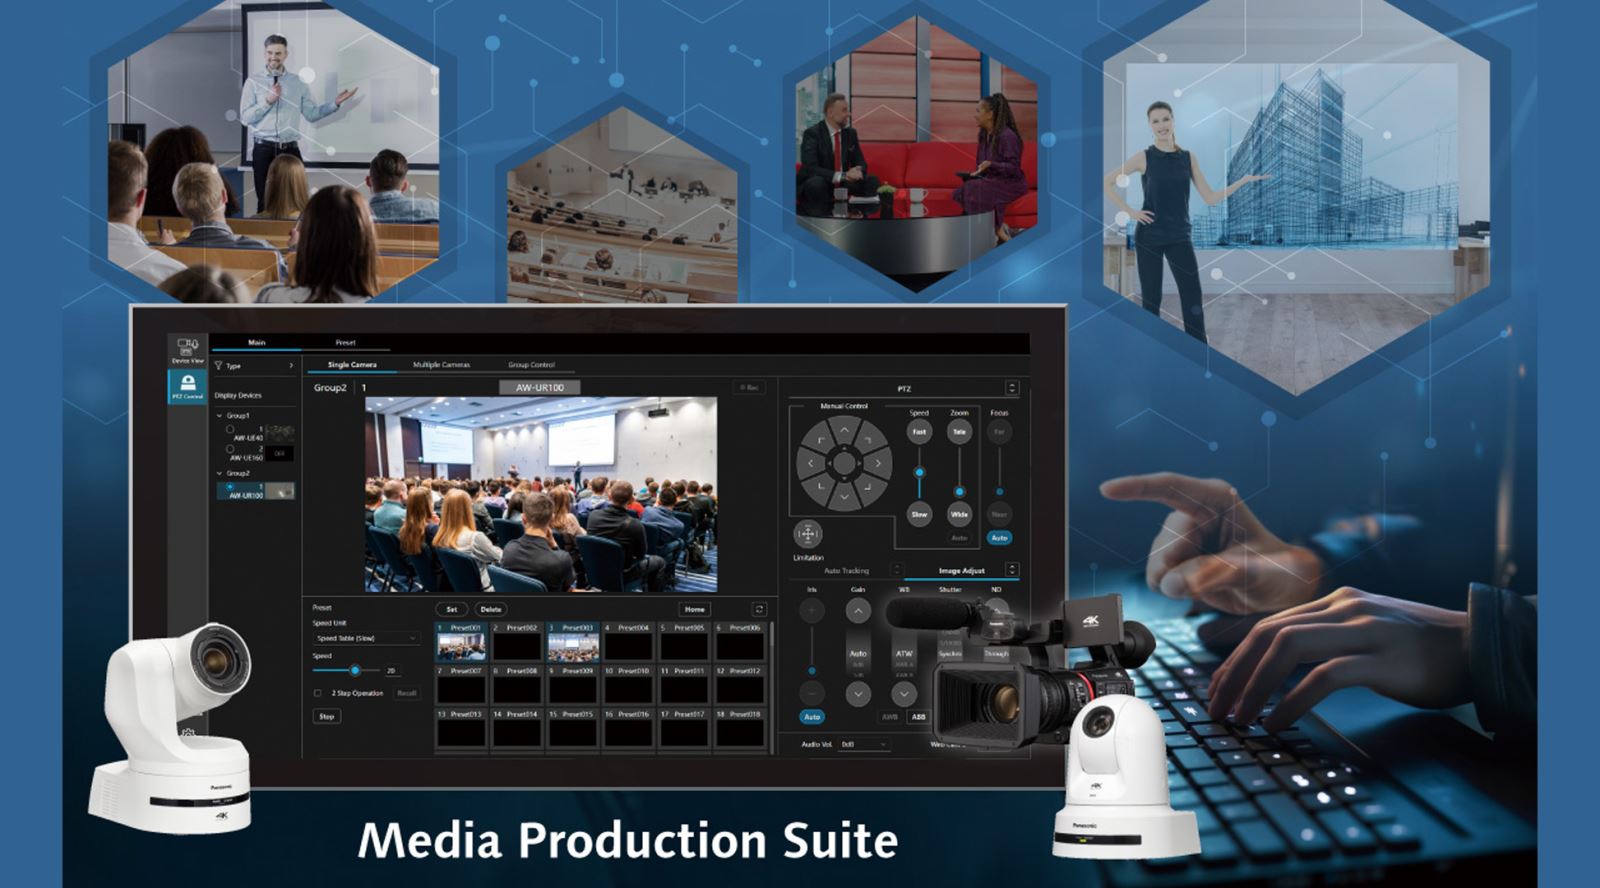 Panasonic Media Production Suite